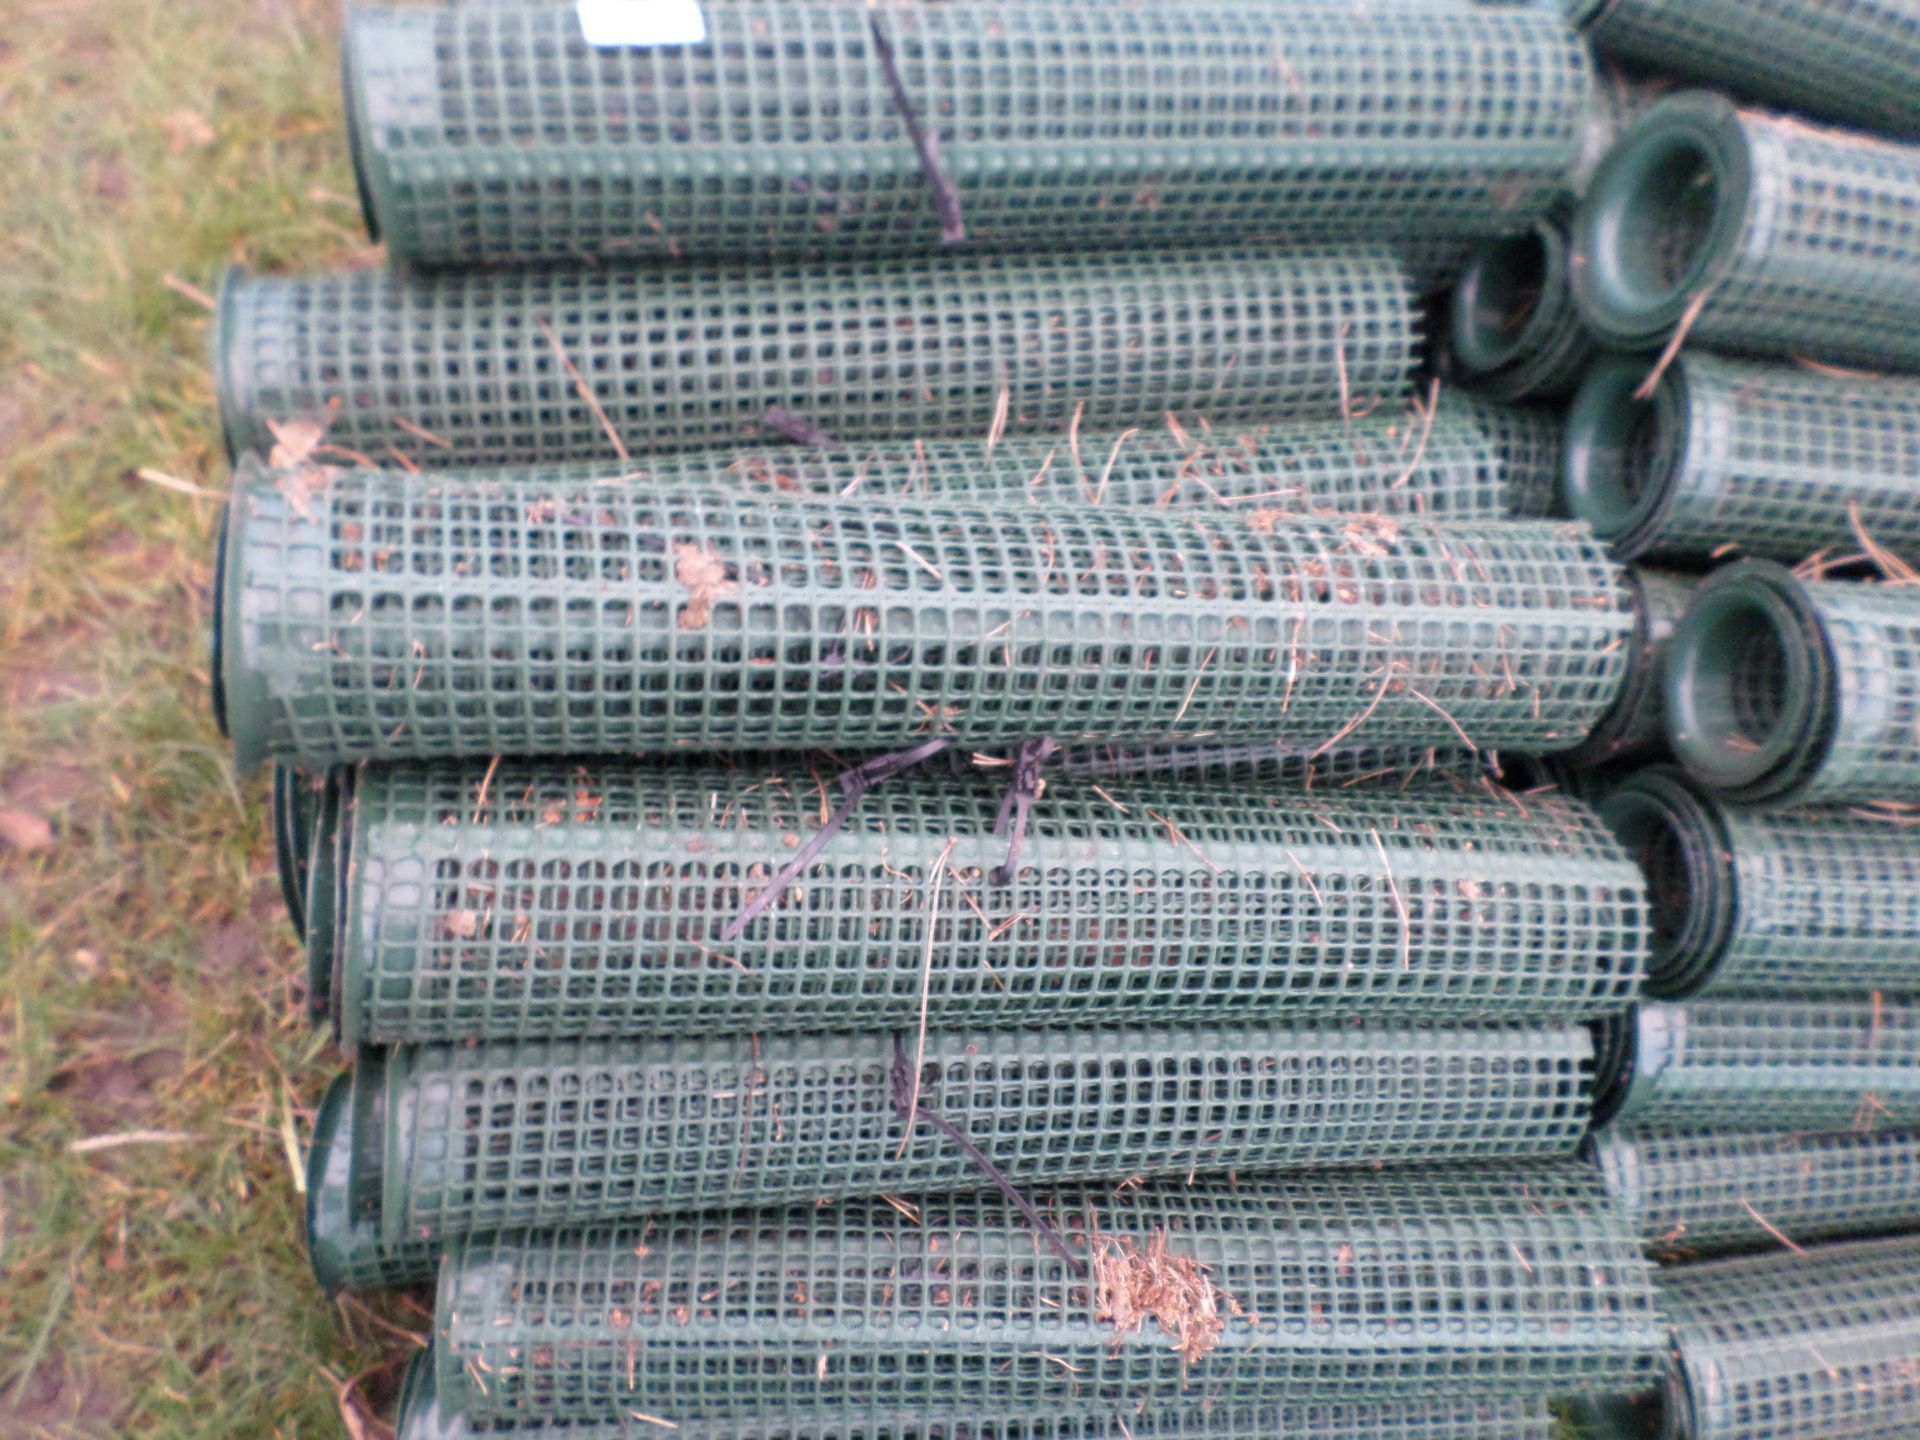 800 x 60cm planting tubes - Image 2 of 2